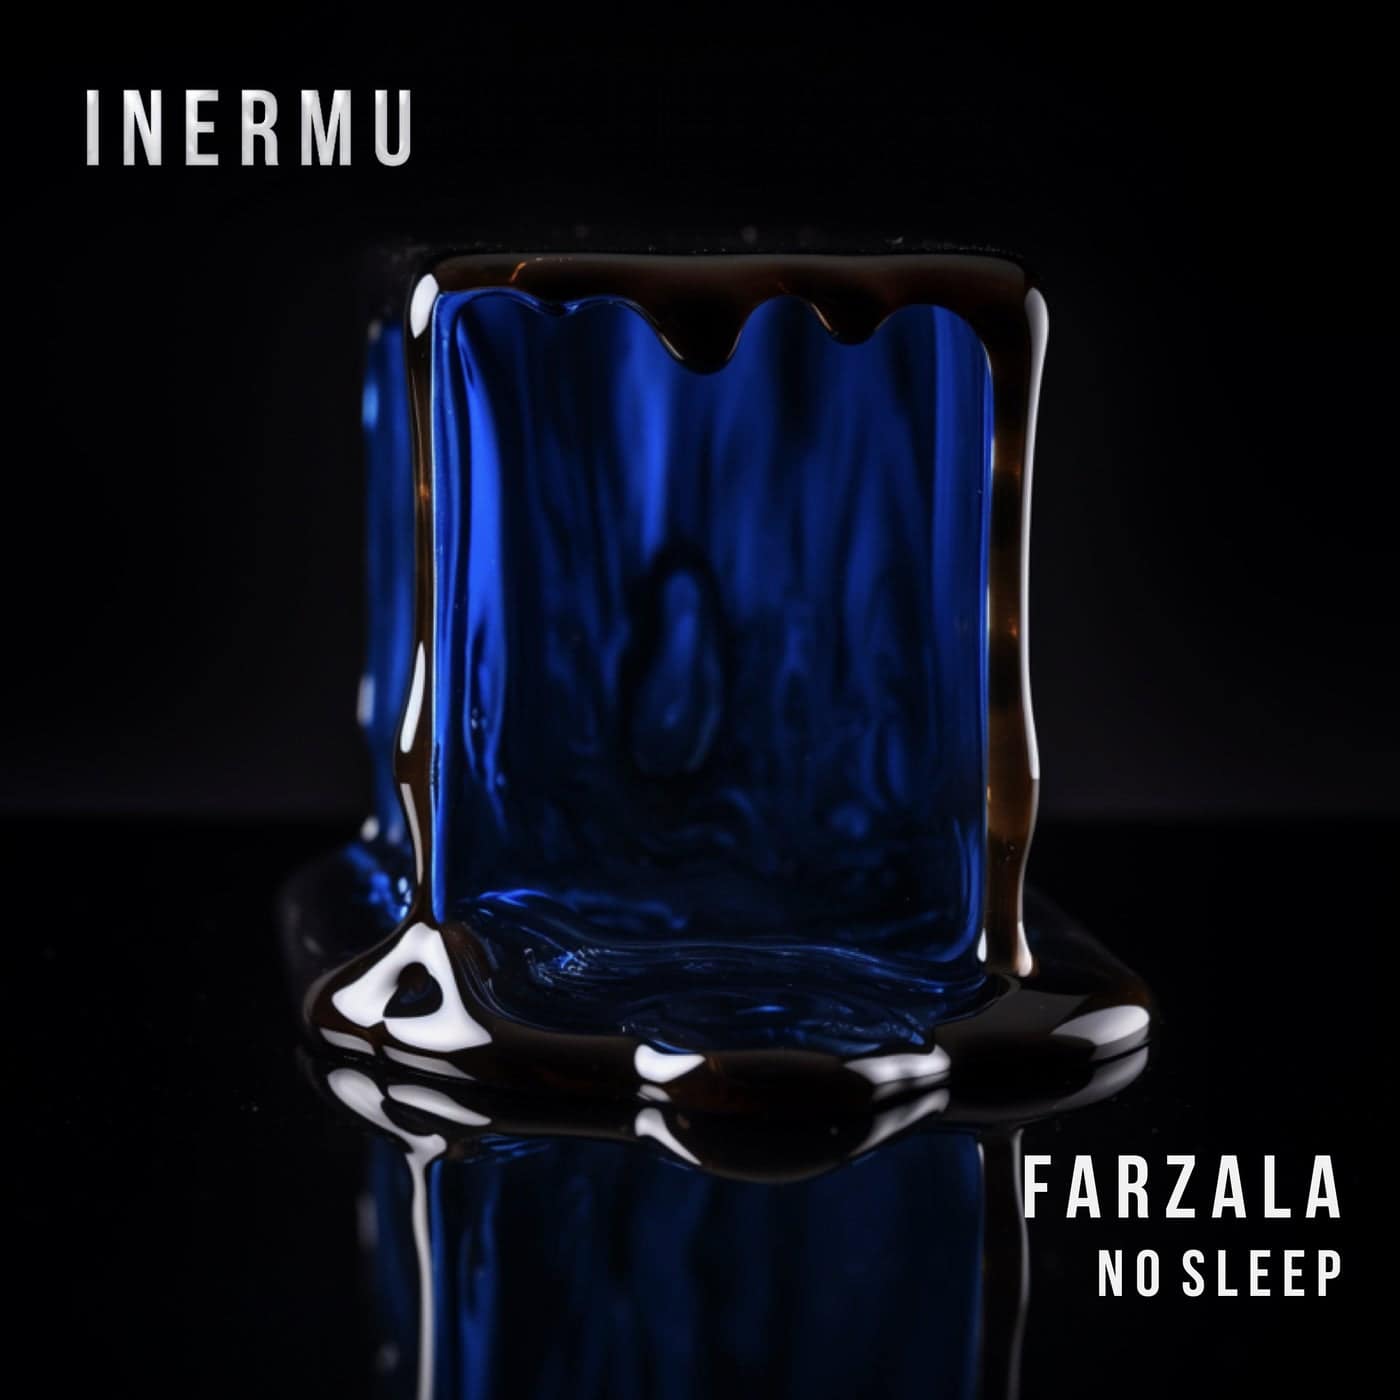 image cover: No Sleep by Farzala on Inermu